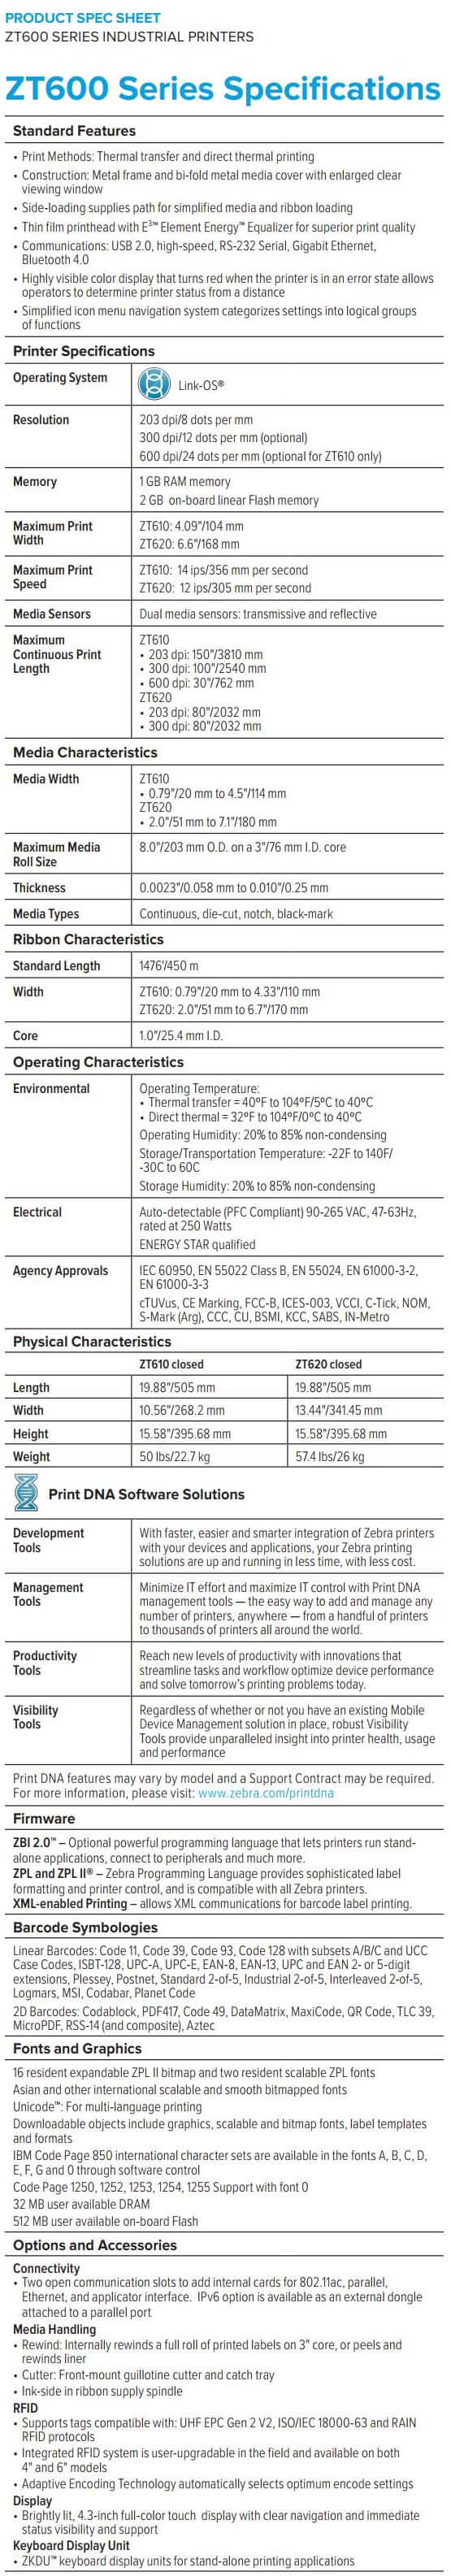 Zebra ZT600 Series Industrial Printers data sheet